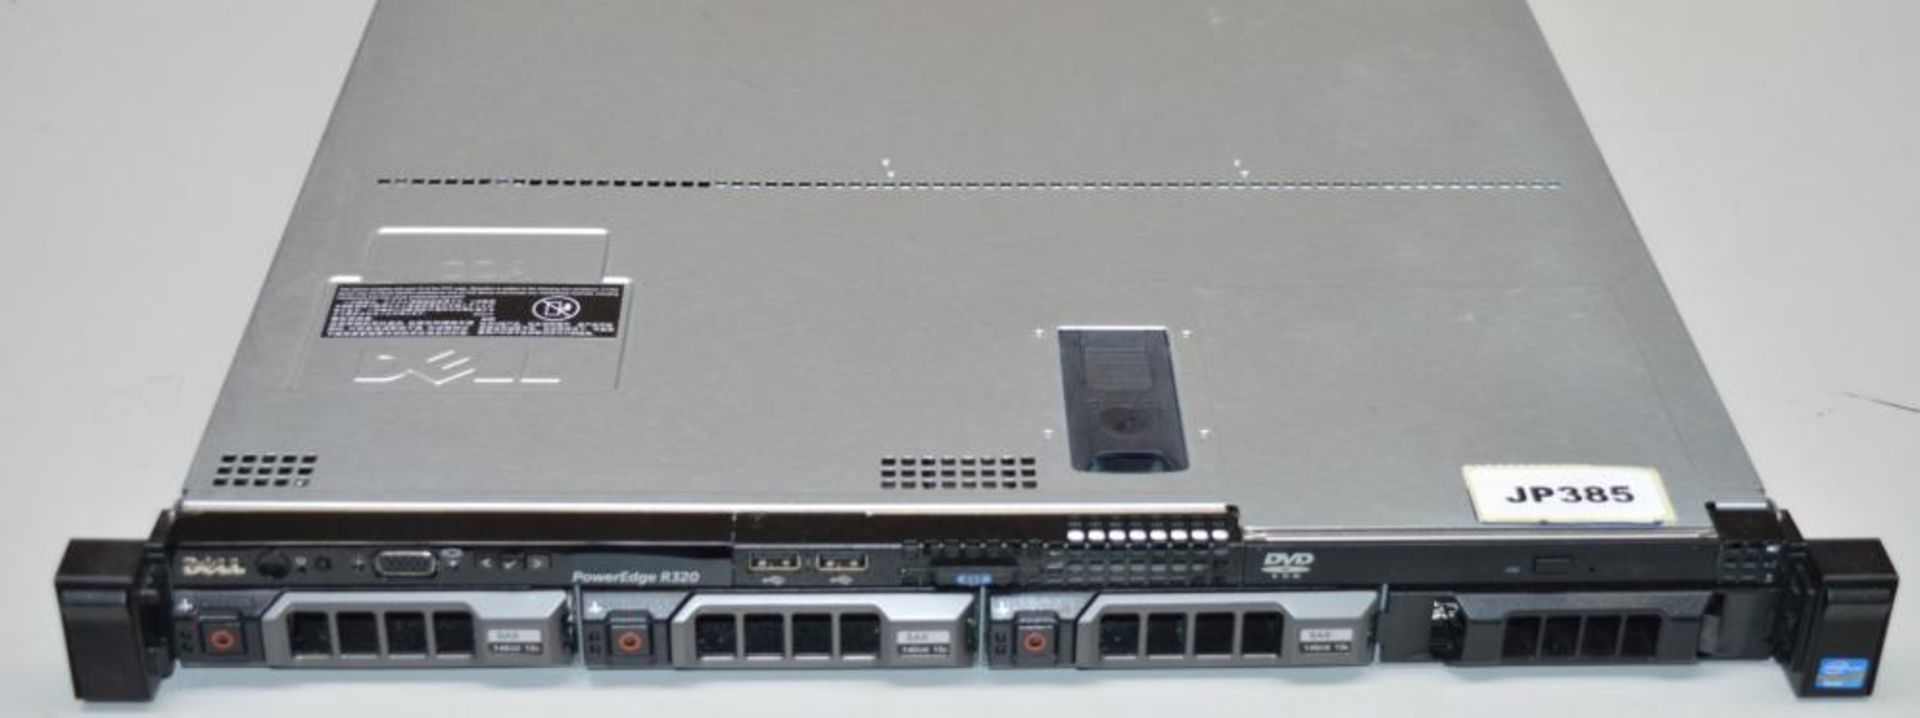 1 x Dell PowerEdge R320 Rack Mount Server - Features Intel Xeon E5-2407 Quad Core Processor and 4gb - Bild 5 aus 5